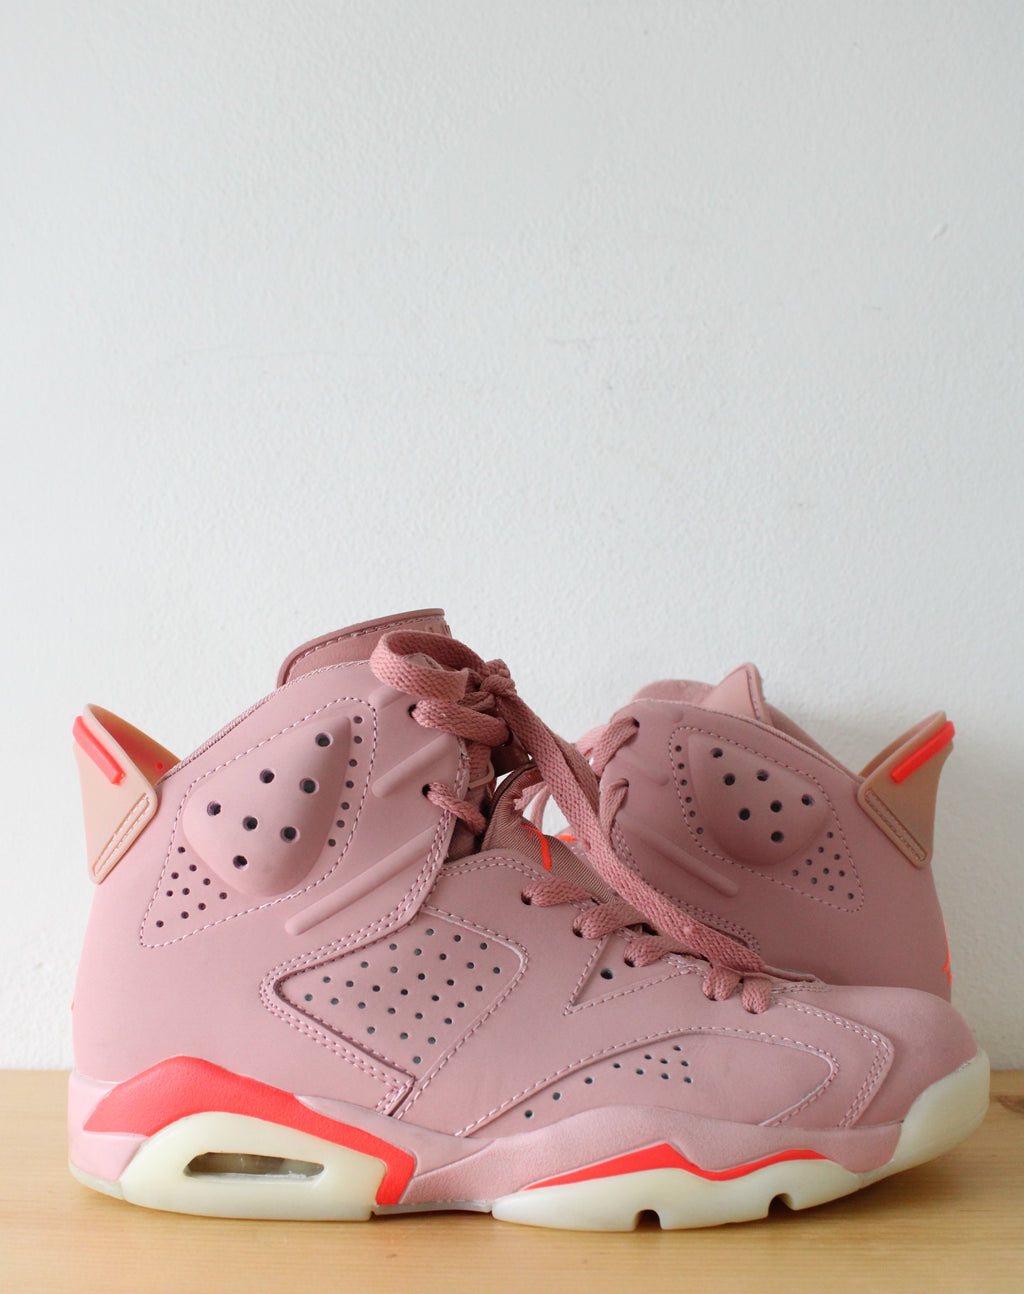 Aleali May x Air Jordan "Millennial Pink" Sneakers | Size 7